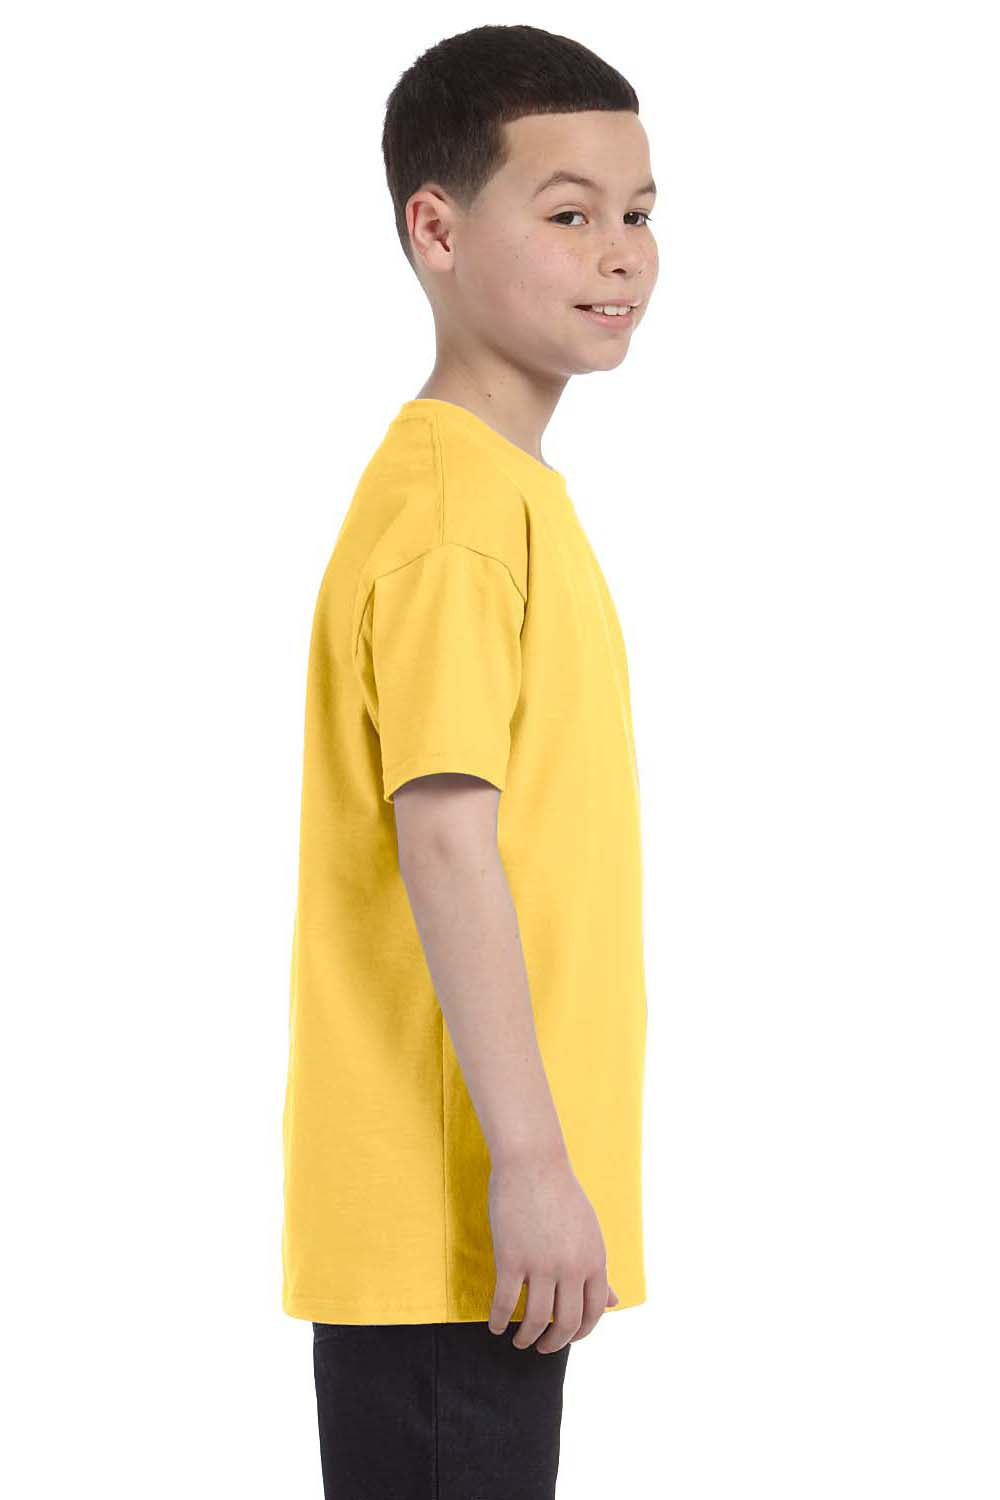 Jerzees 29B Youth Dri-Power Moisture Wicking Short Sleeve Crewneck T-Shirt Island Yellow Side